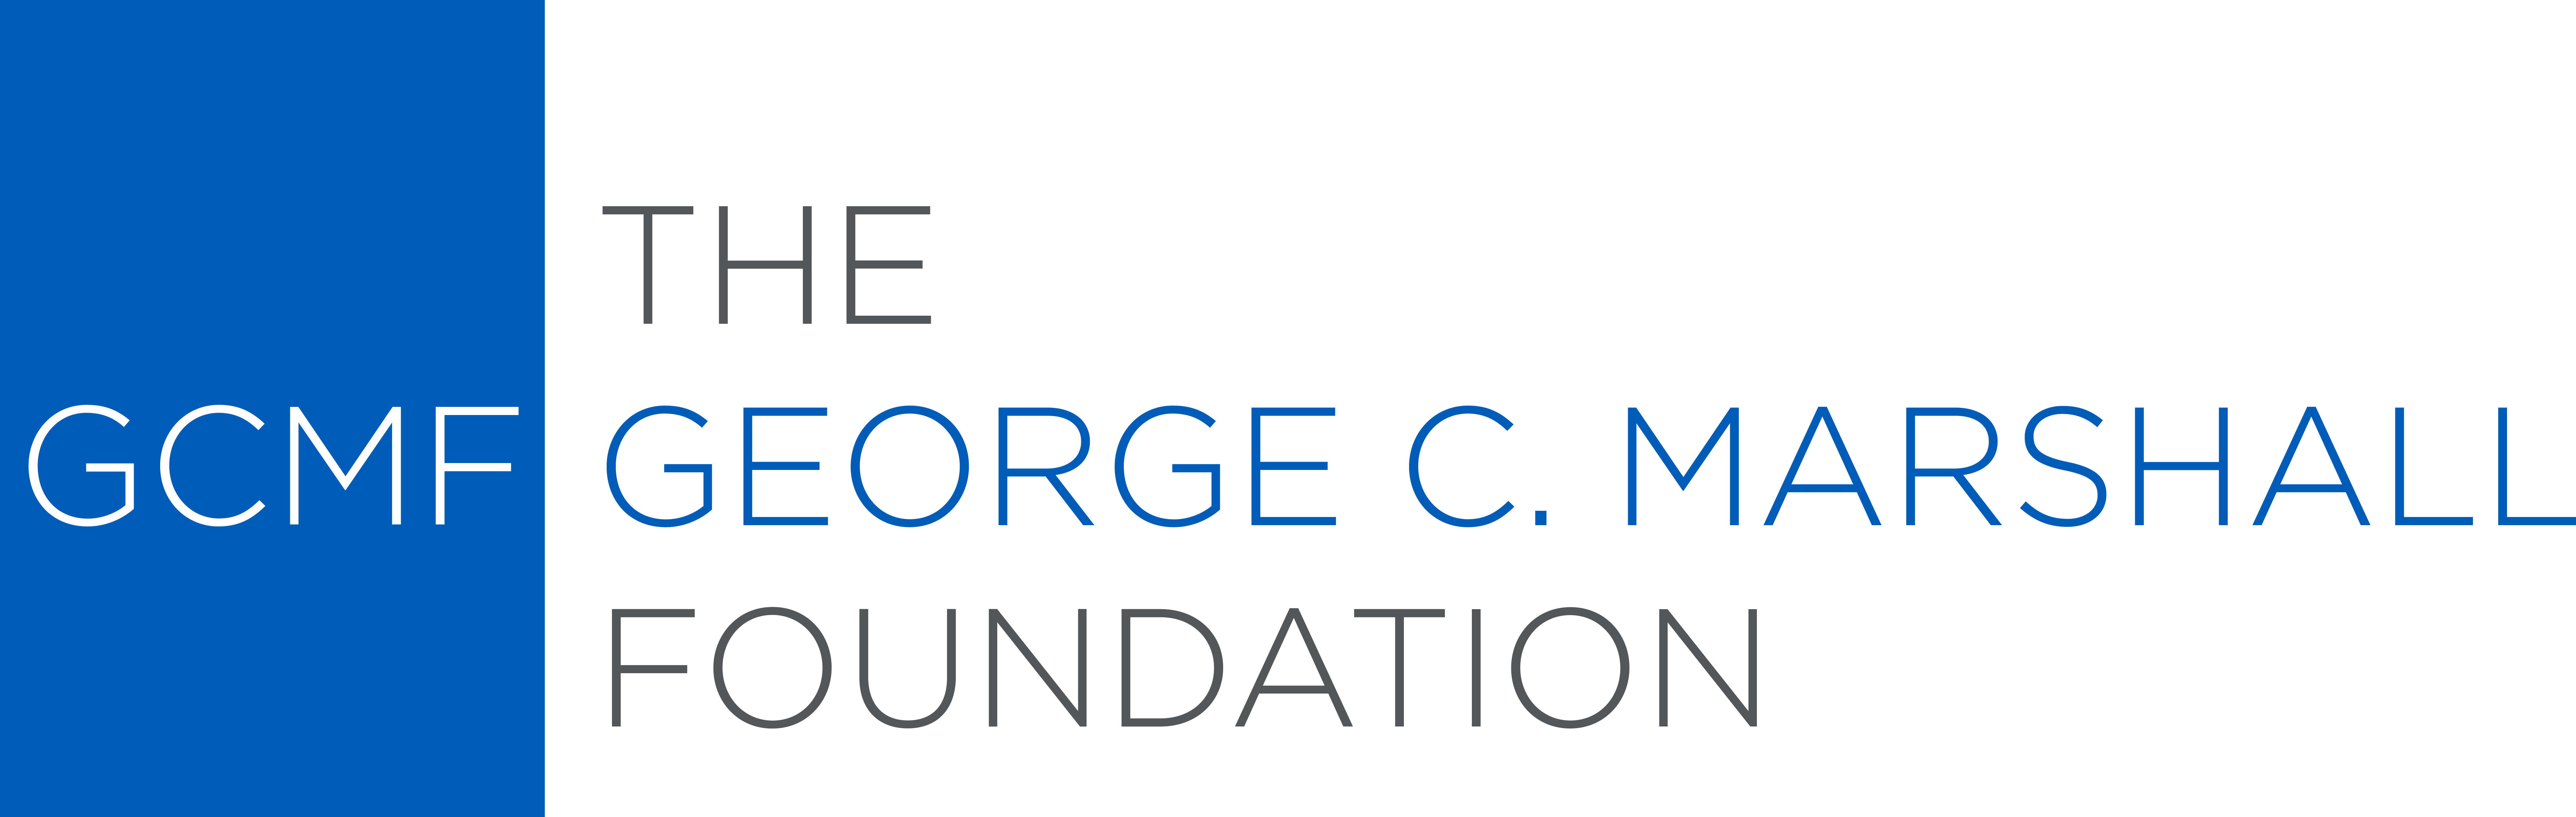 The george c. marshall foundation